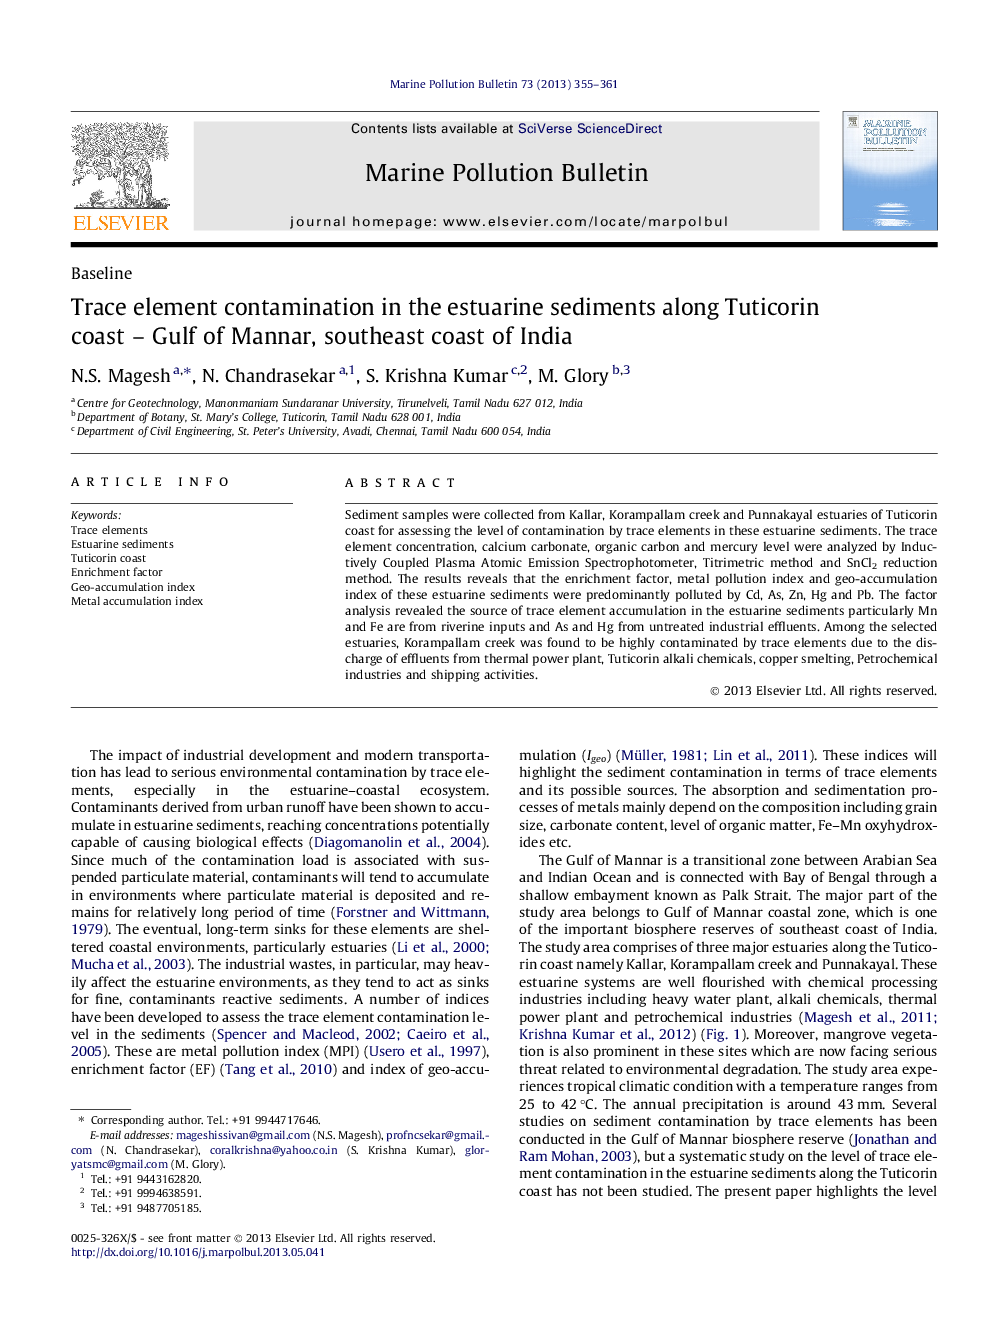 BaselineTrace element contamination in the estuarine sediments along Tuticorin coast - Gulf of Mannar, southeast coast of India